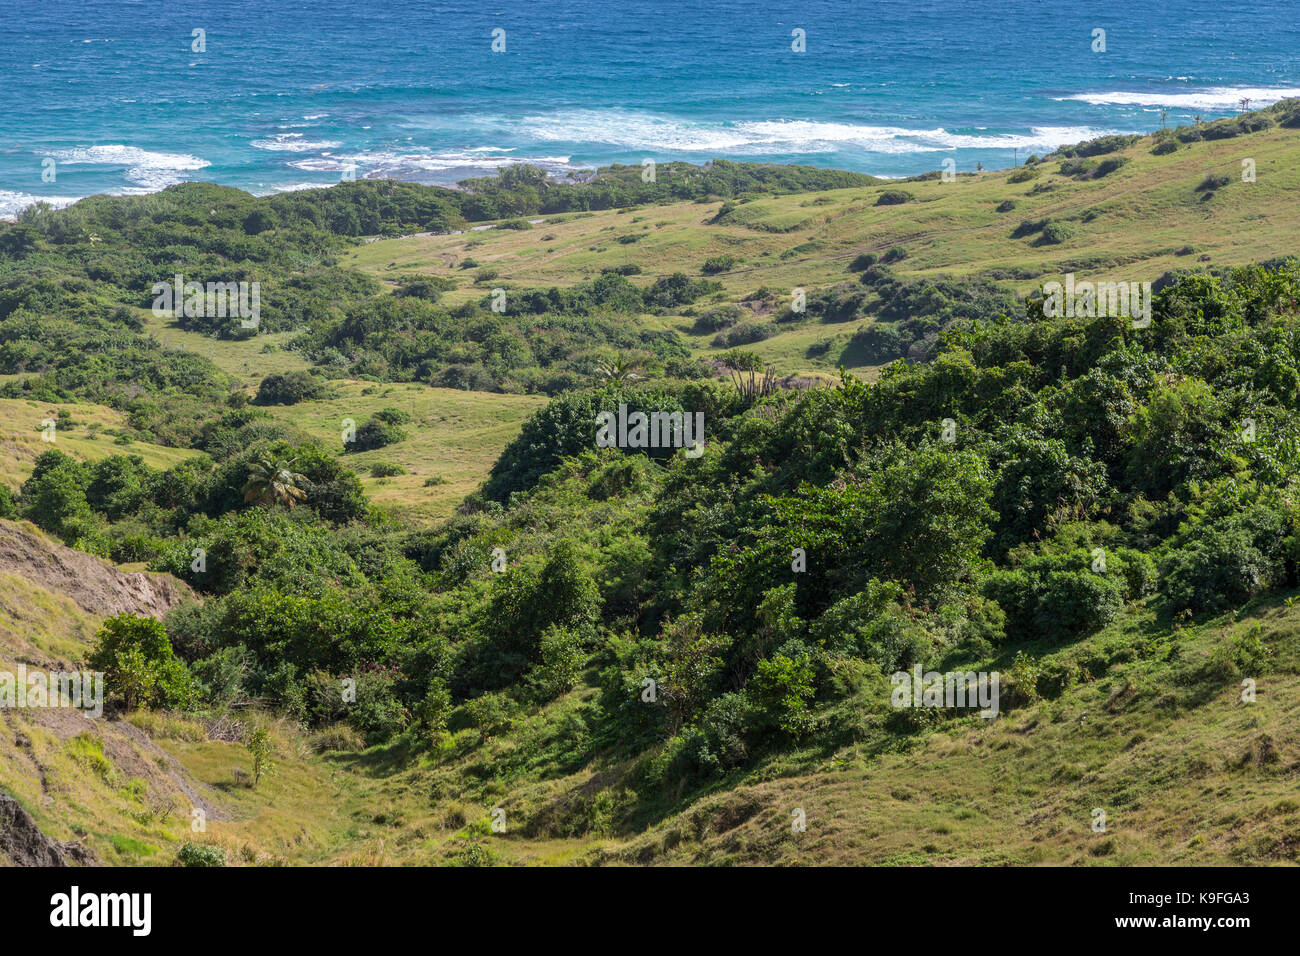 Barbados.  Atlantic Ocean View from 'Scotland' Region of the Island. Stock Photo